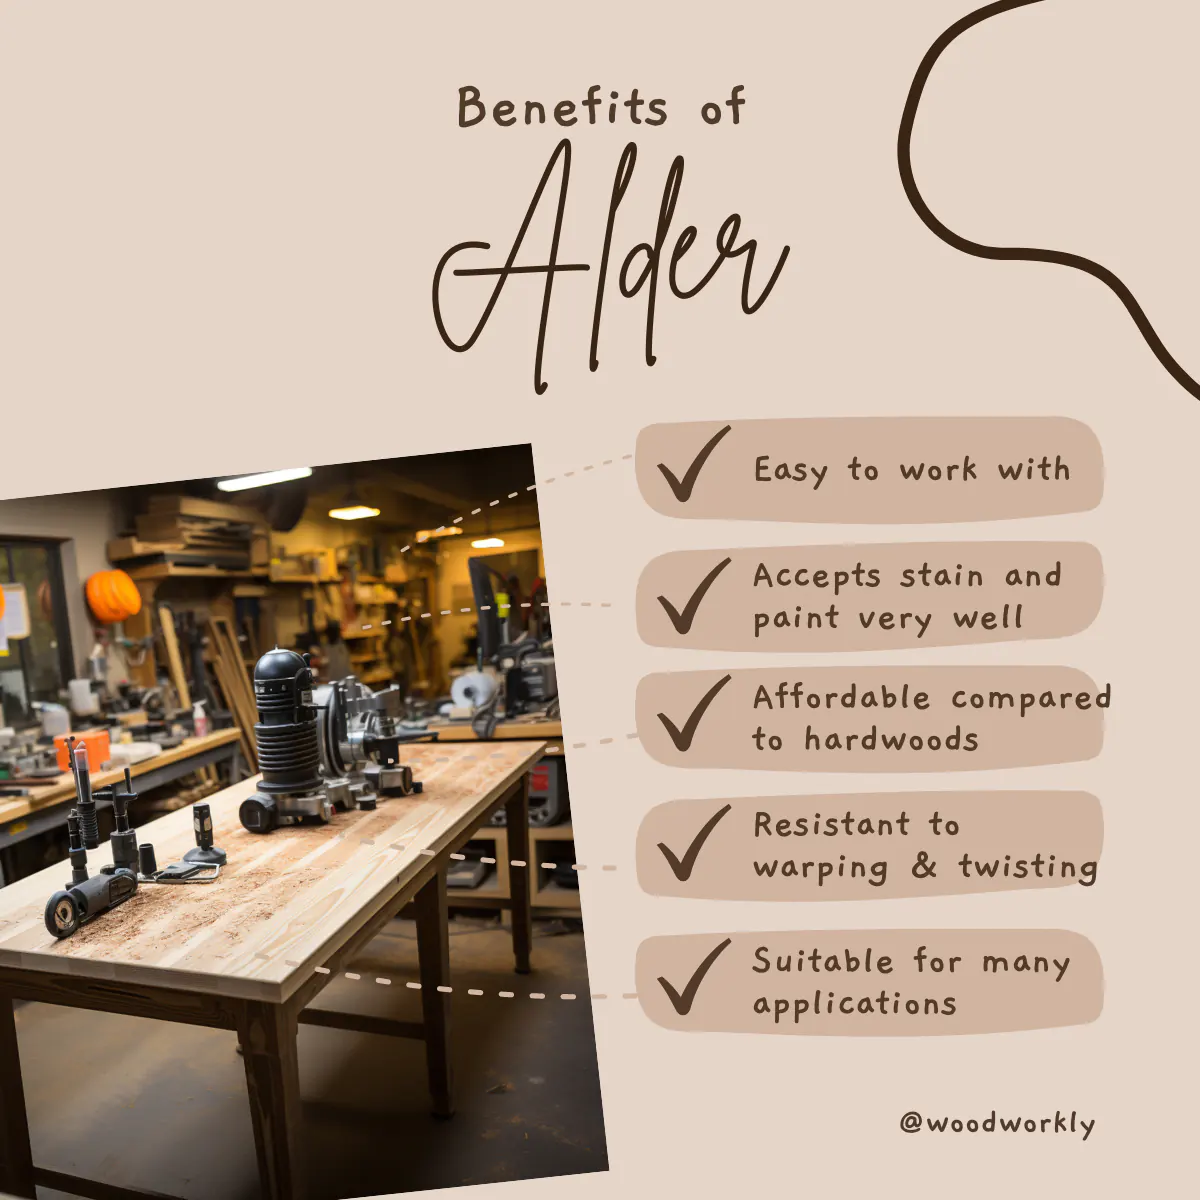 Benefits of alder wood